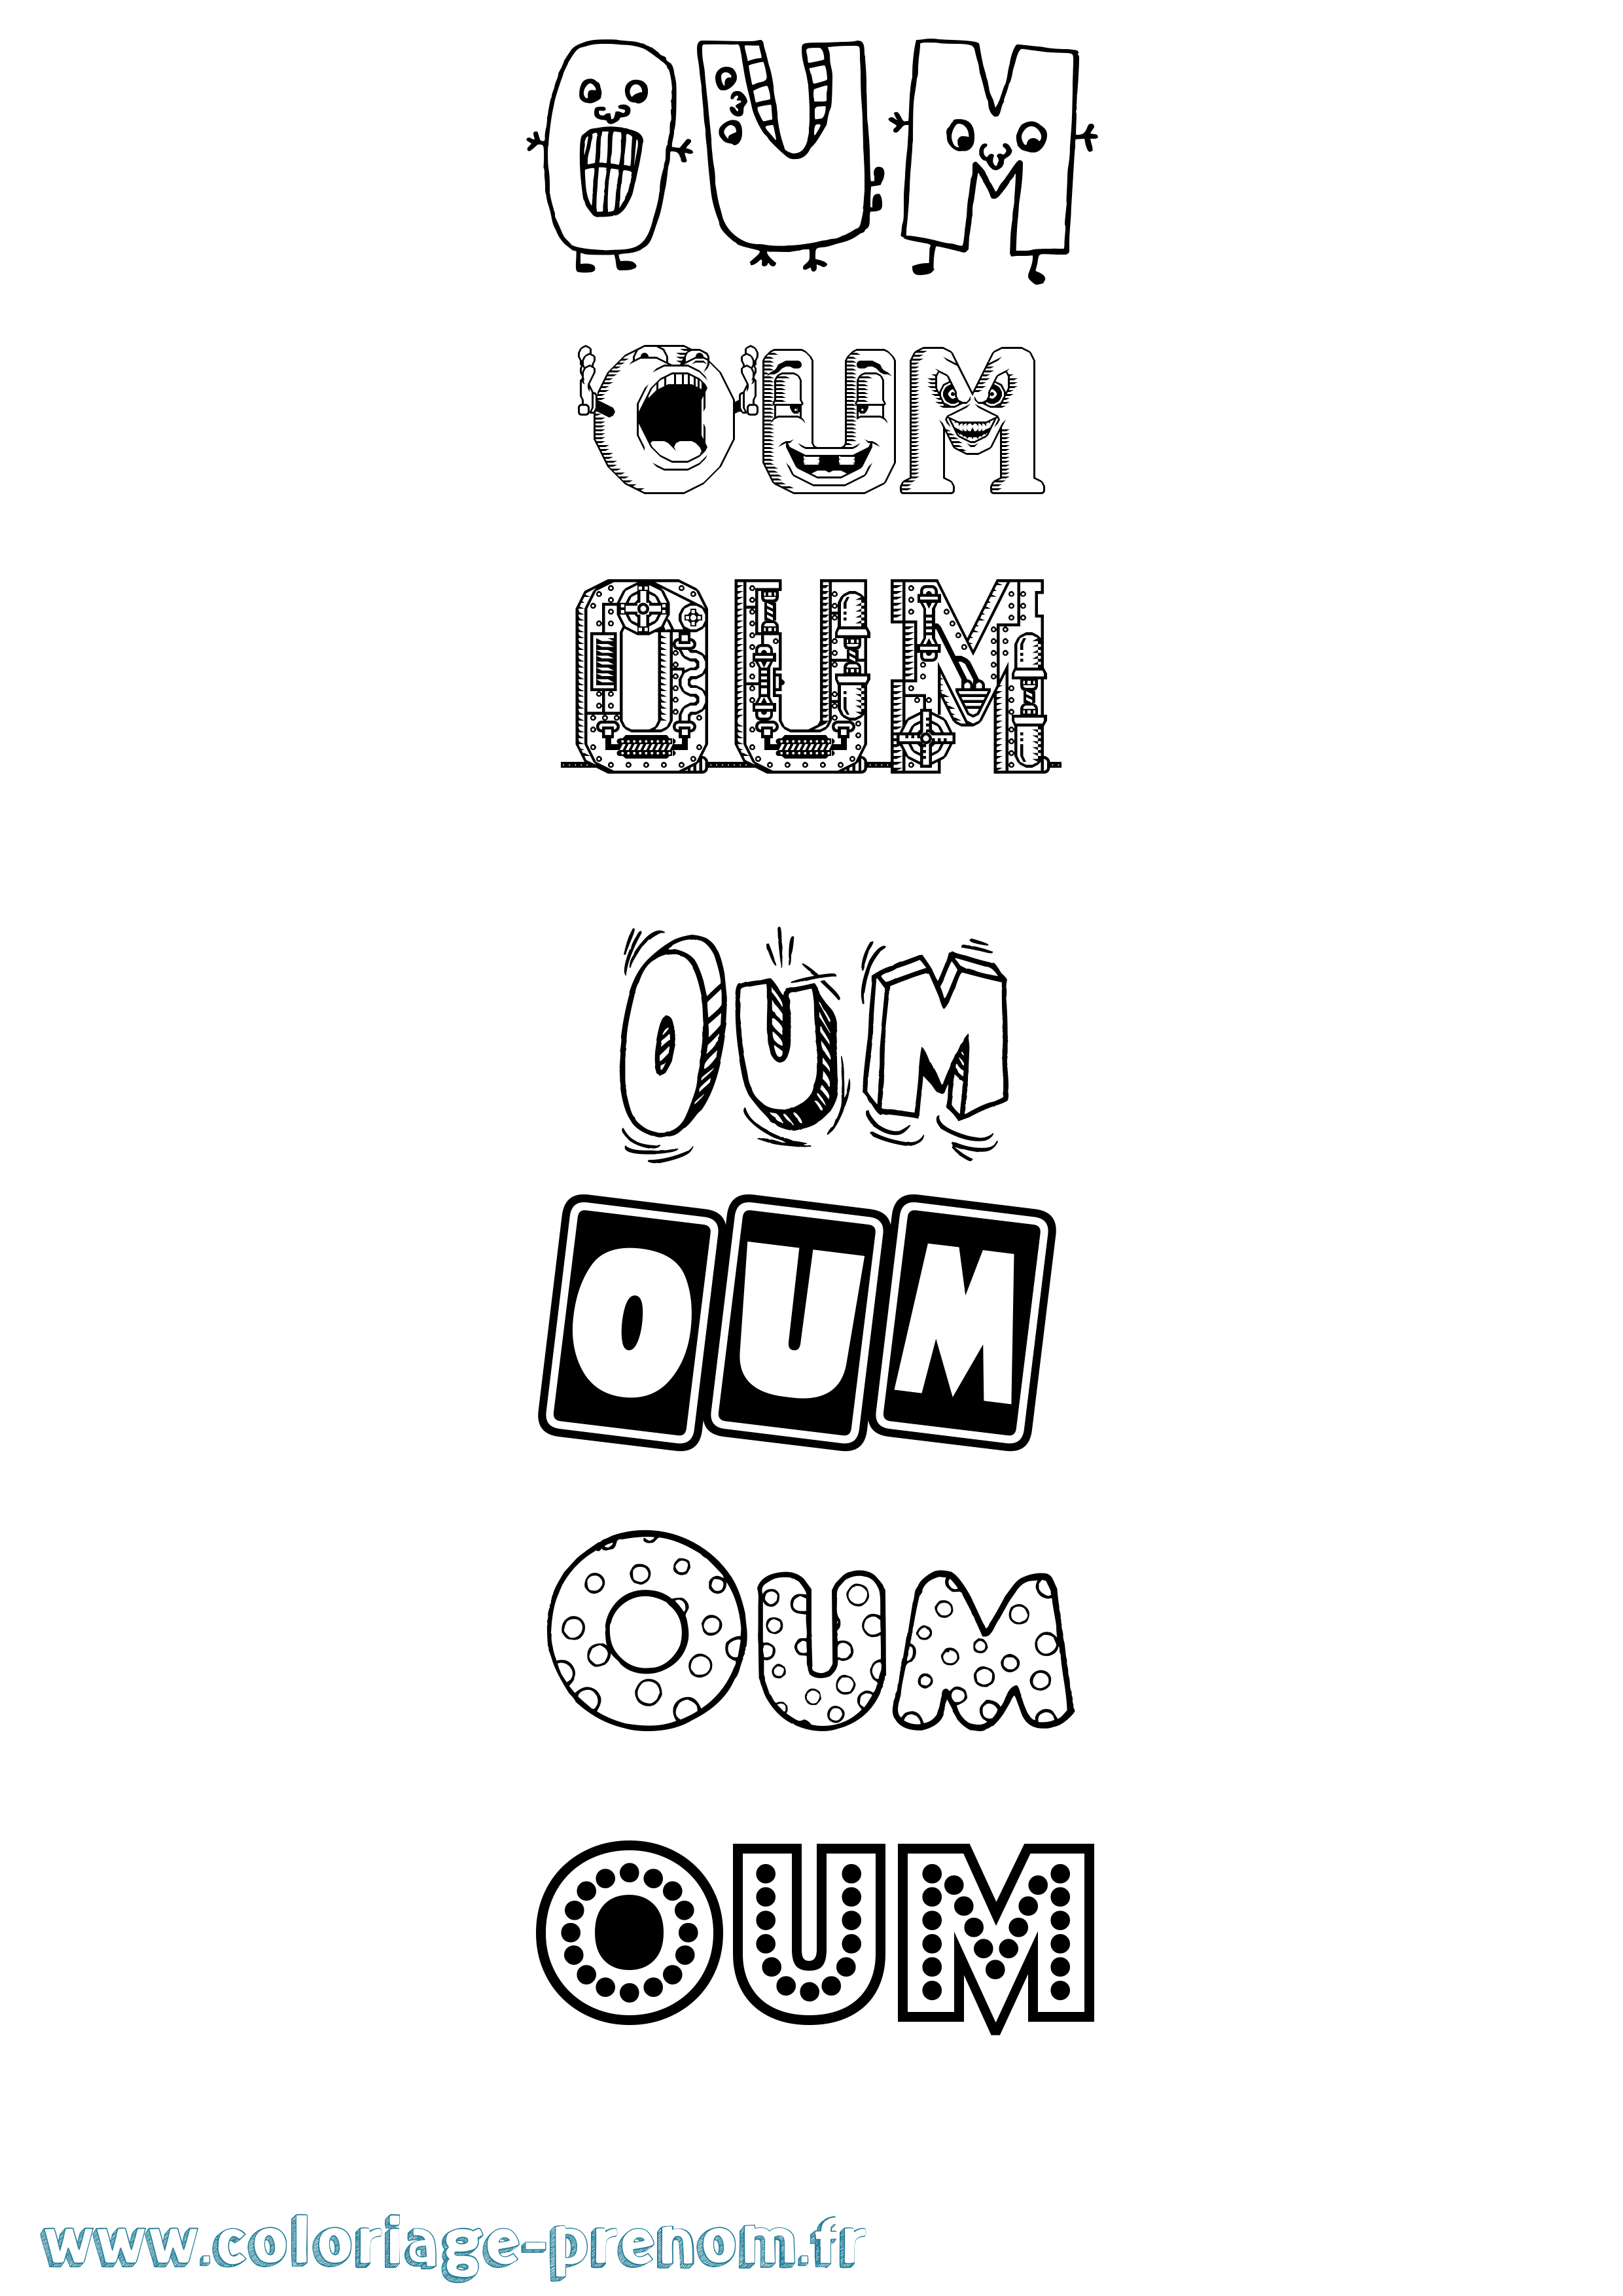 Coloriage prénom Oum Fun